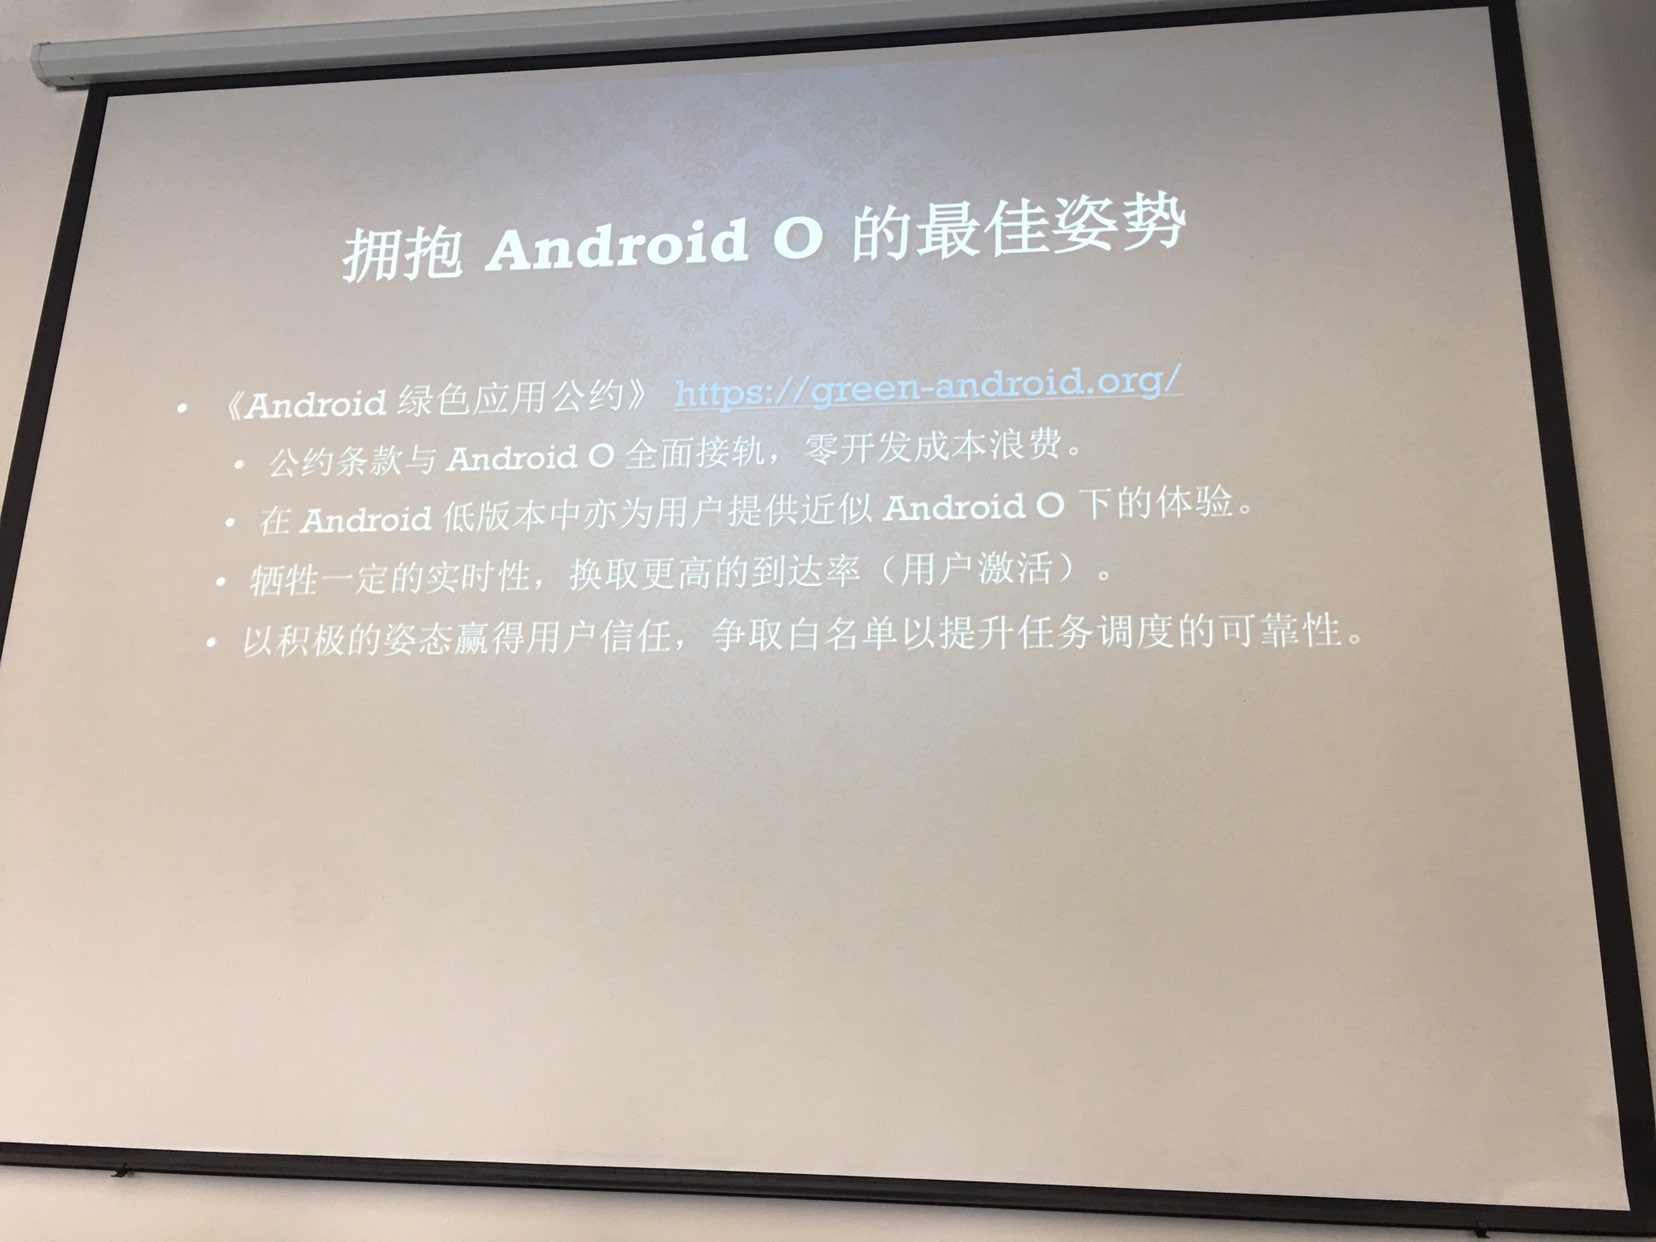 Android O 的最佳姿势